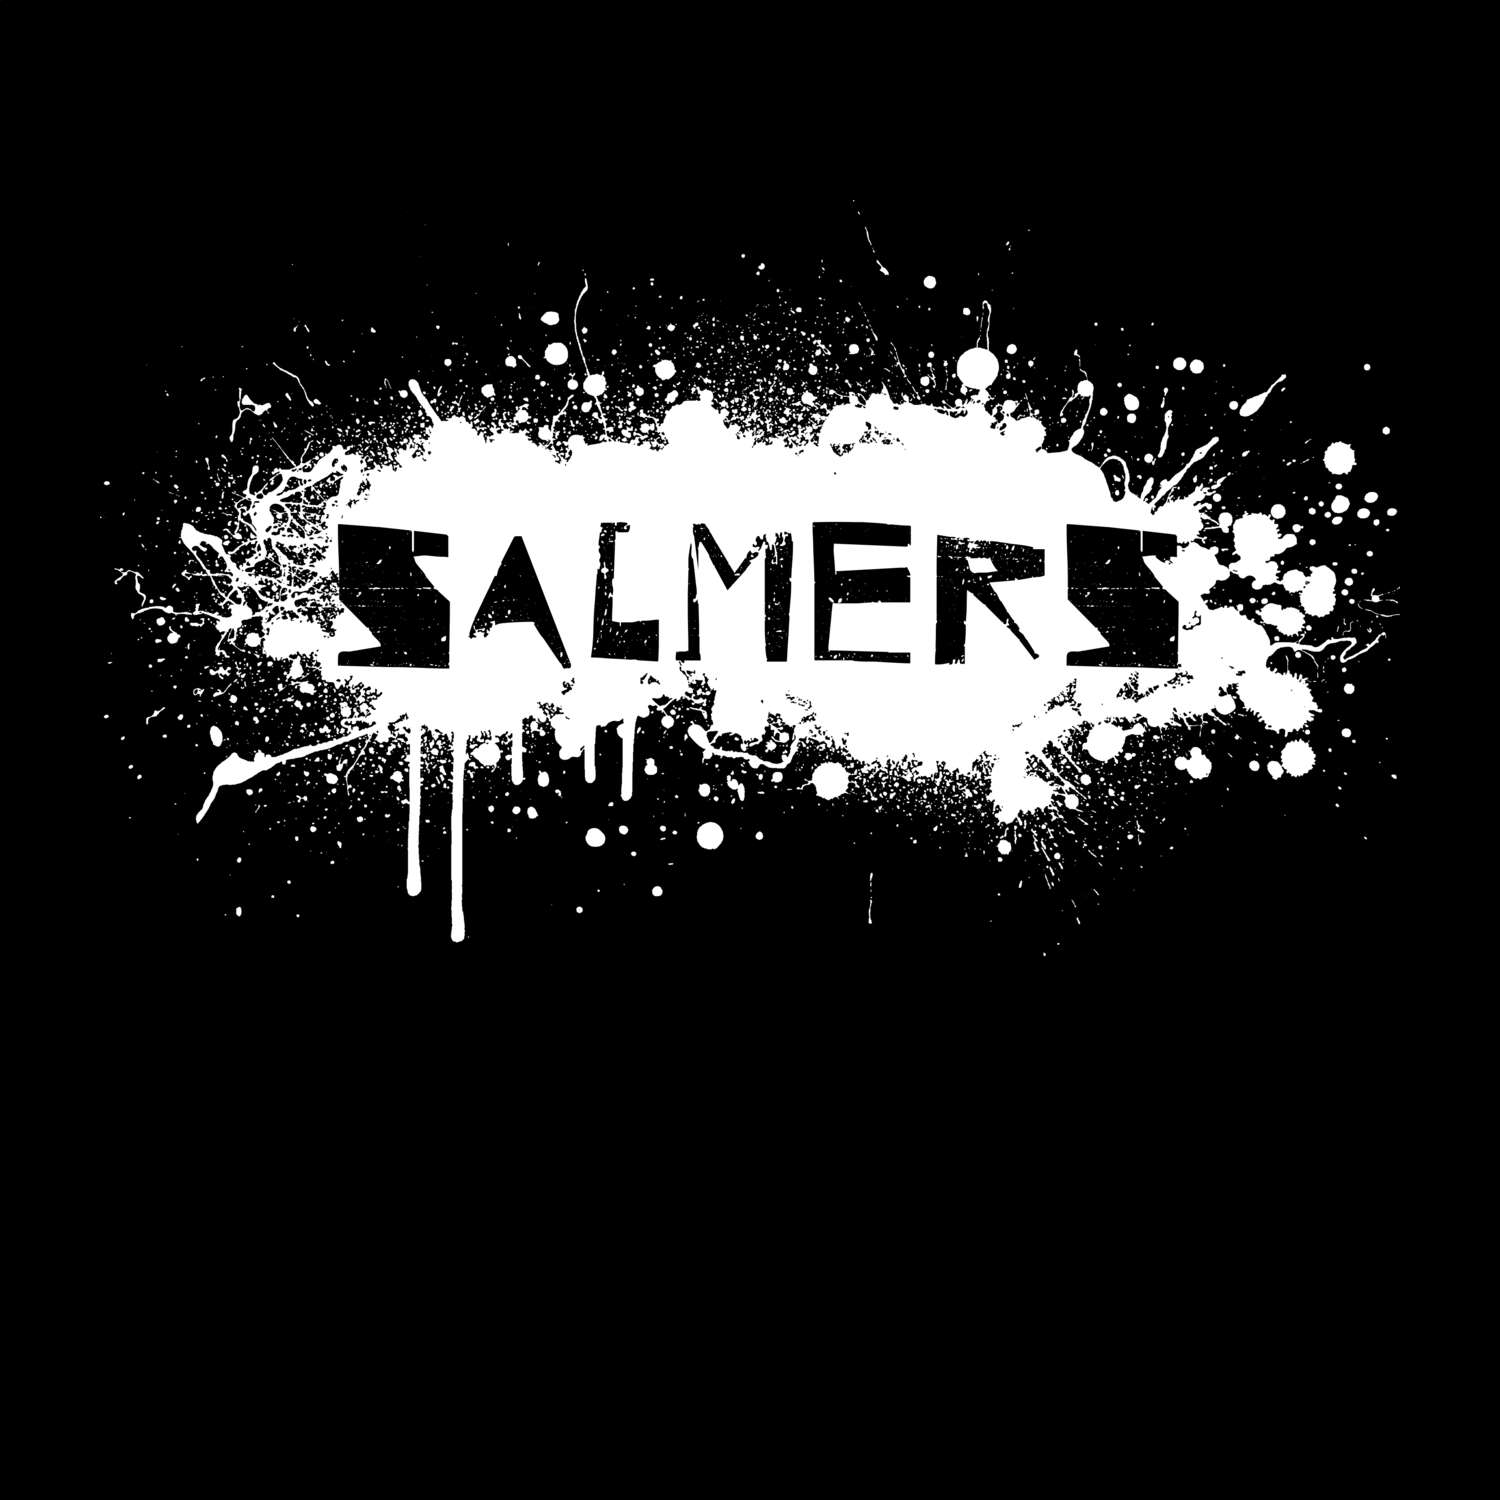 Salmers T-Shirt »Paint Splash Punk«